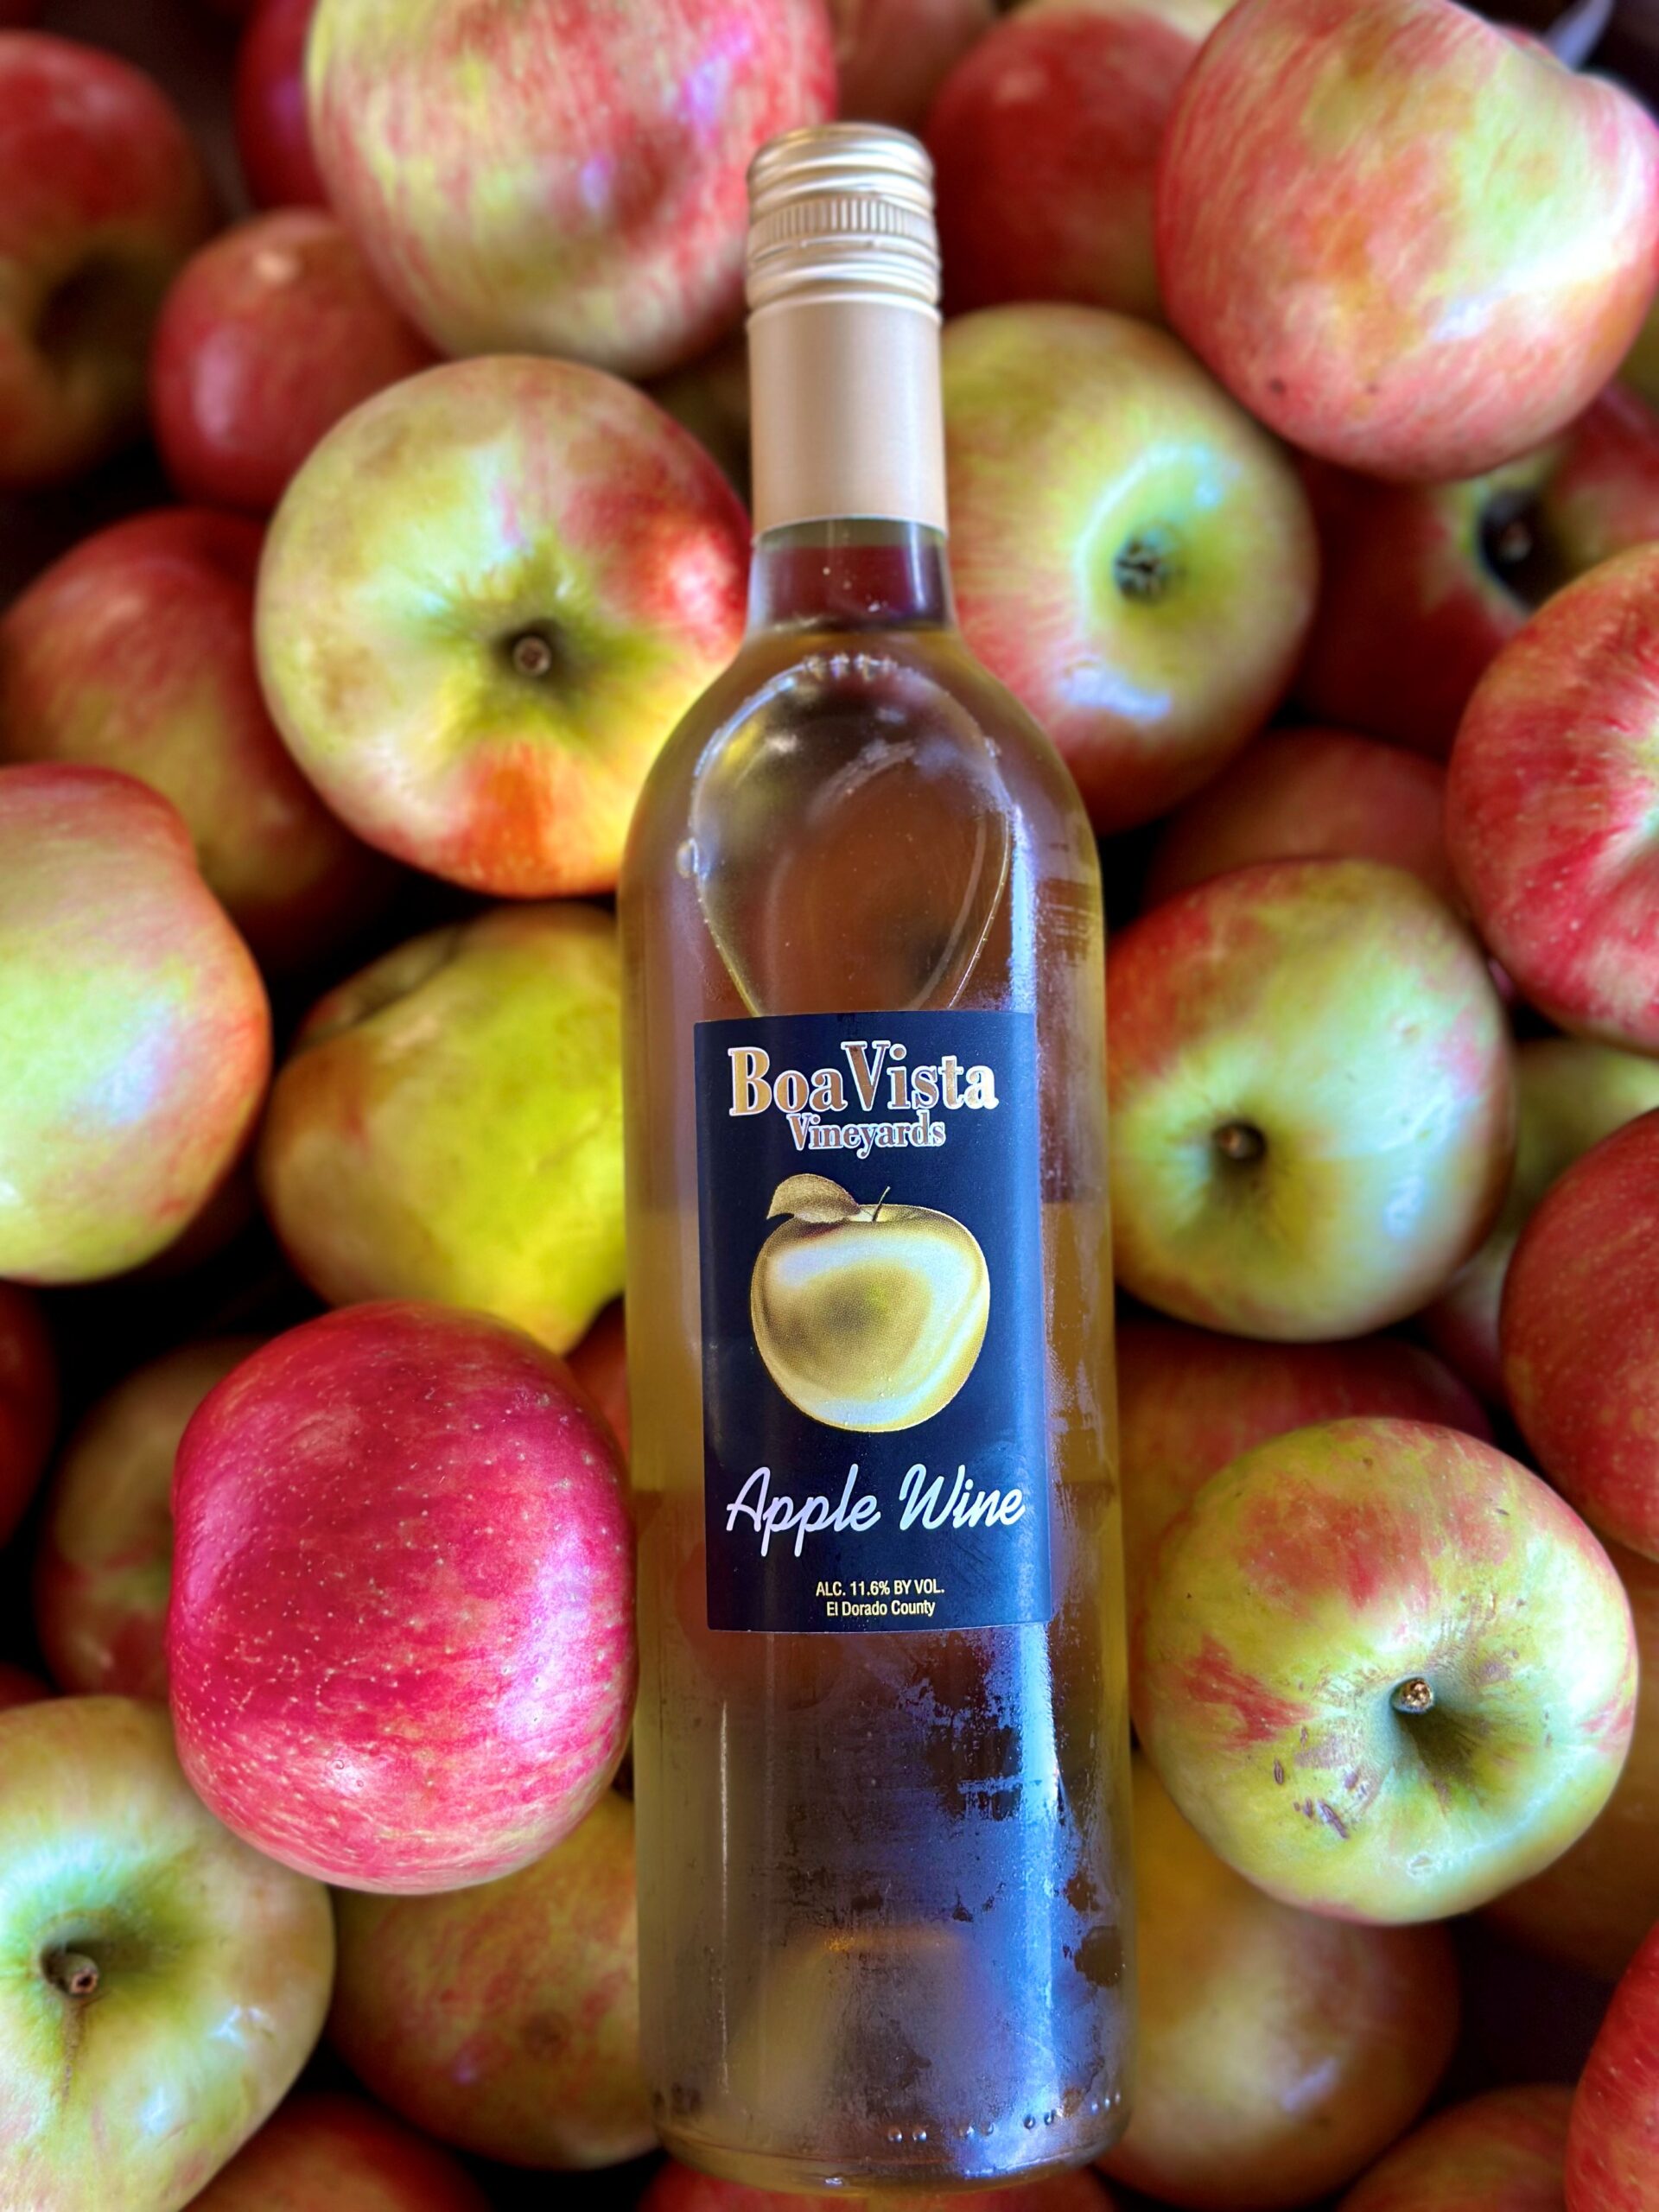 Bottle of Boa Vista wine on top of apples